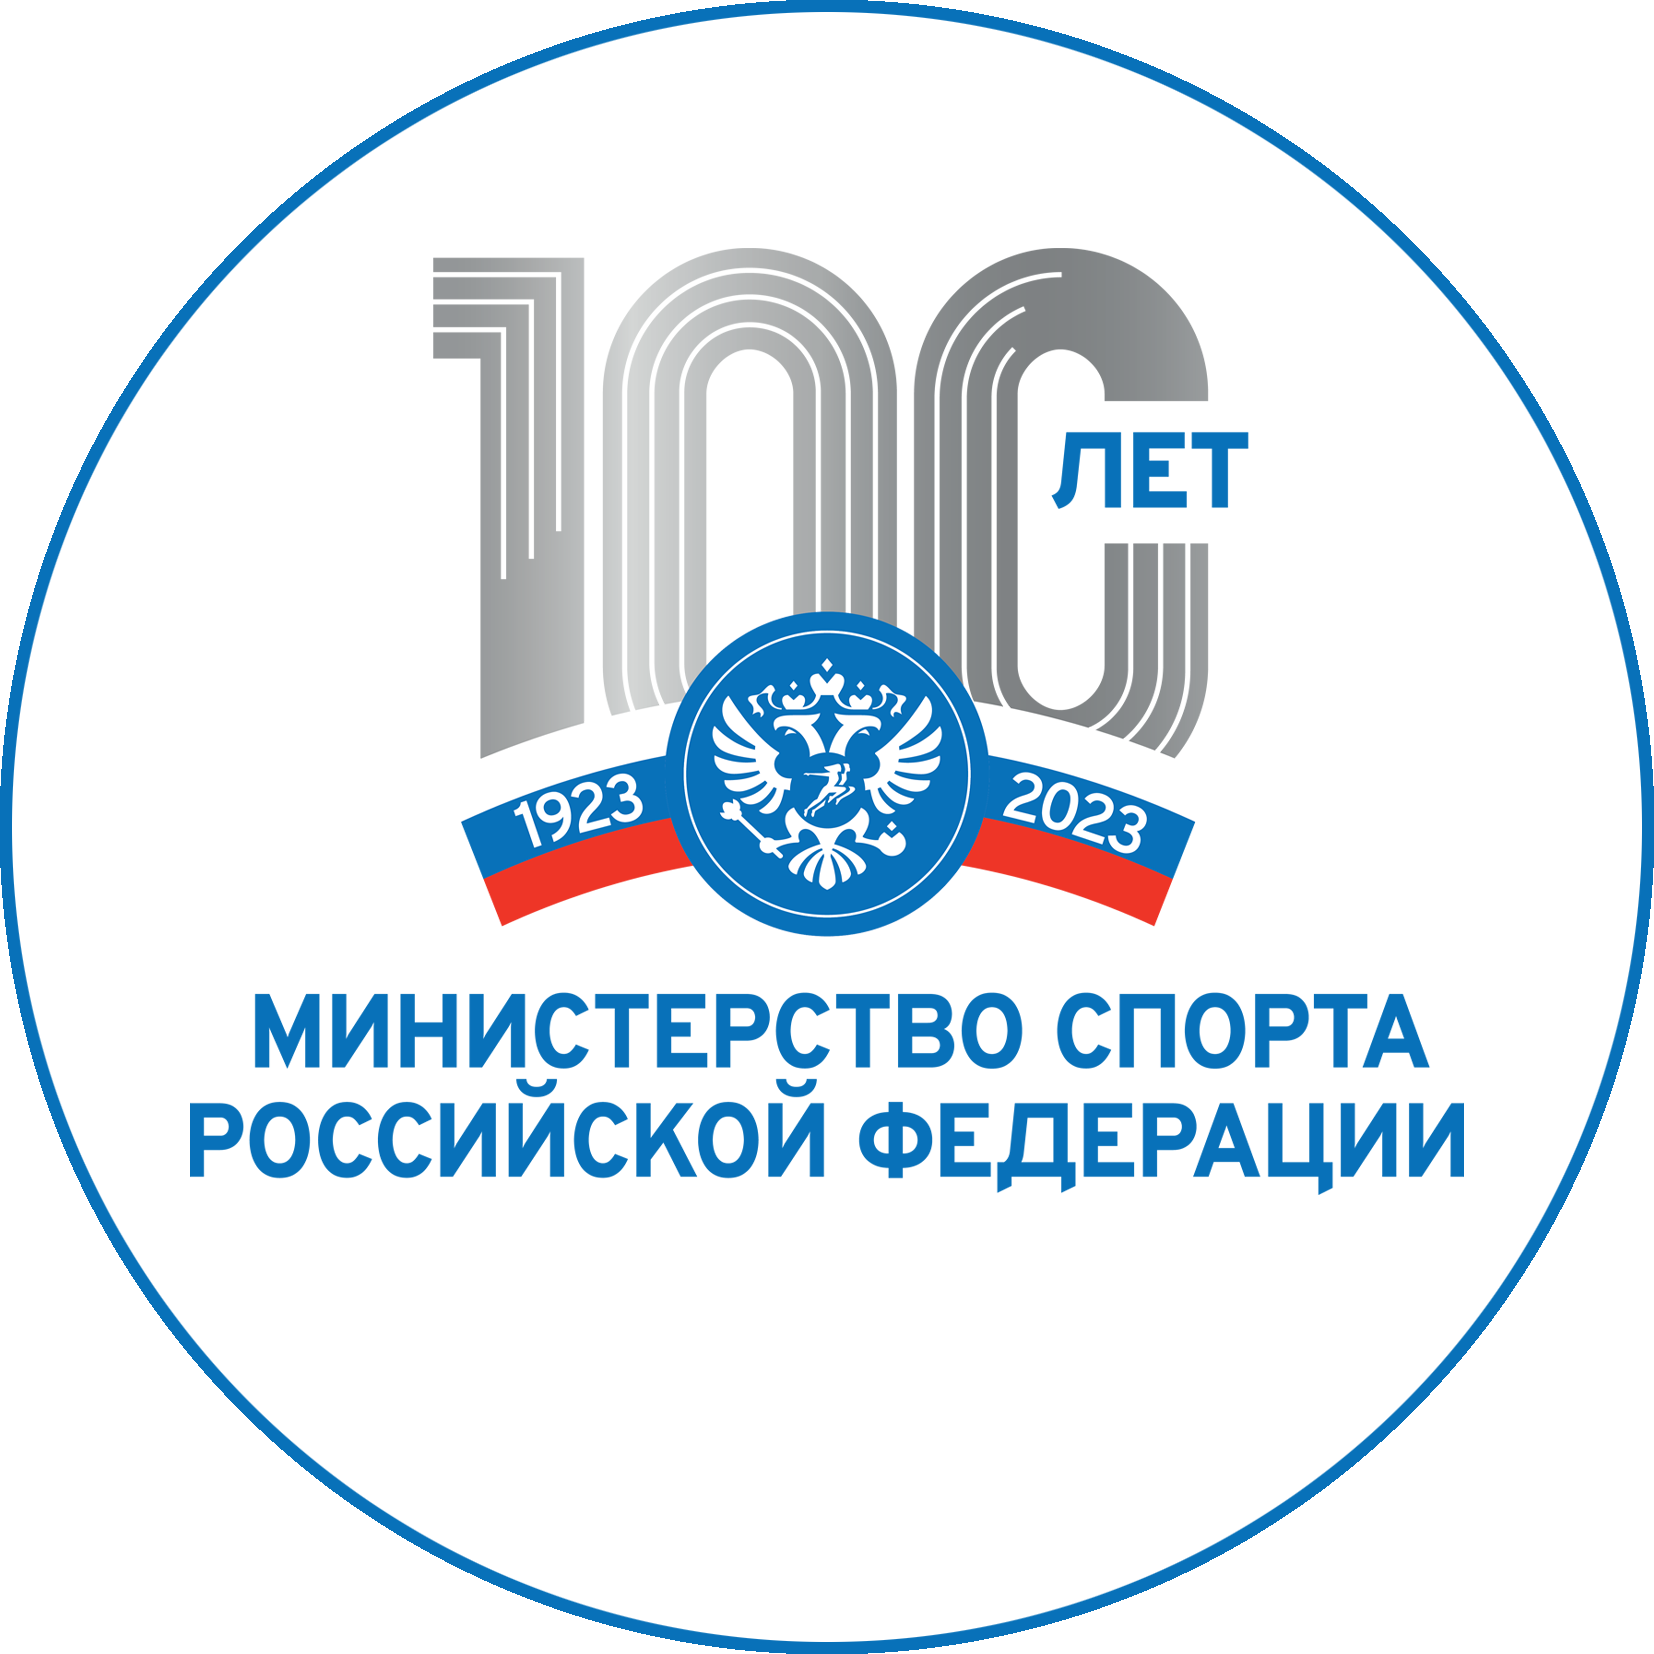 Программа мероприятий, посвященных юбилею Минспорта РФ